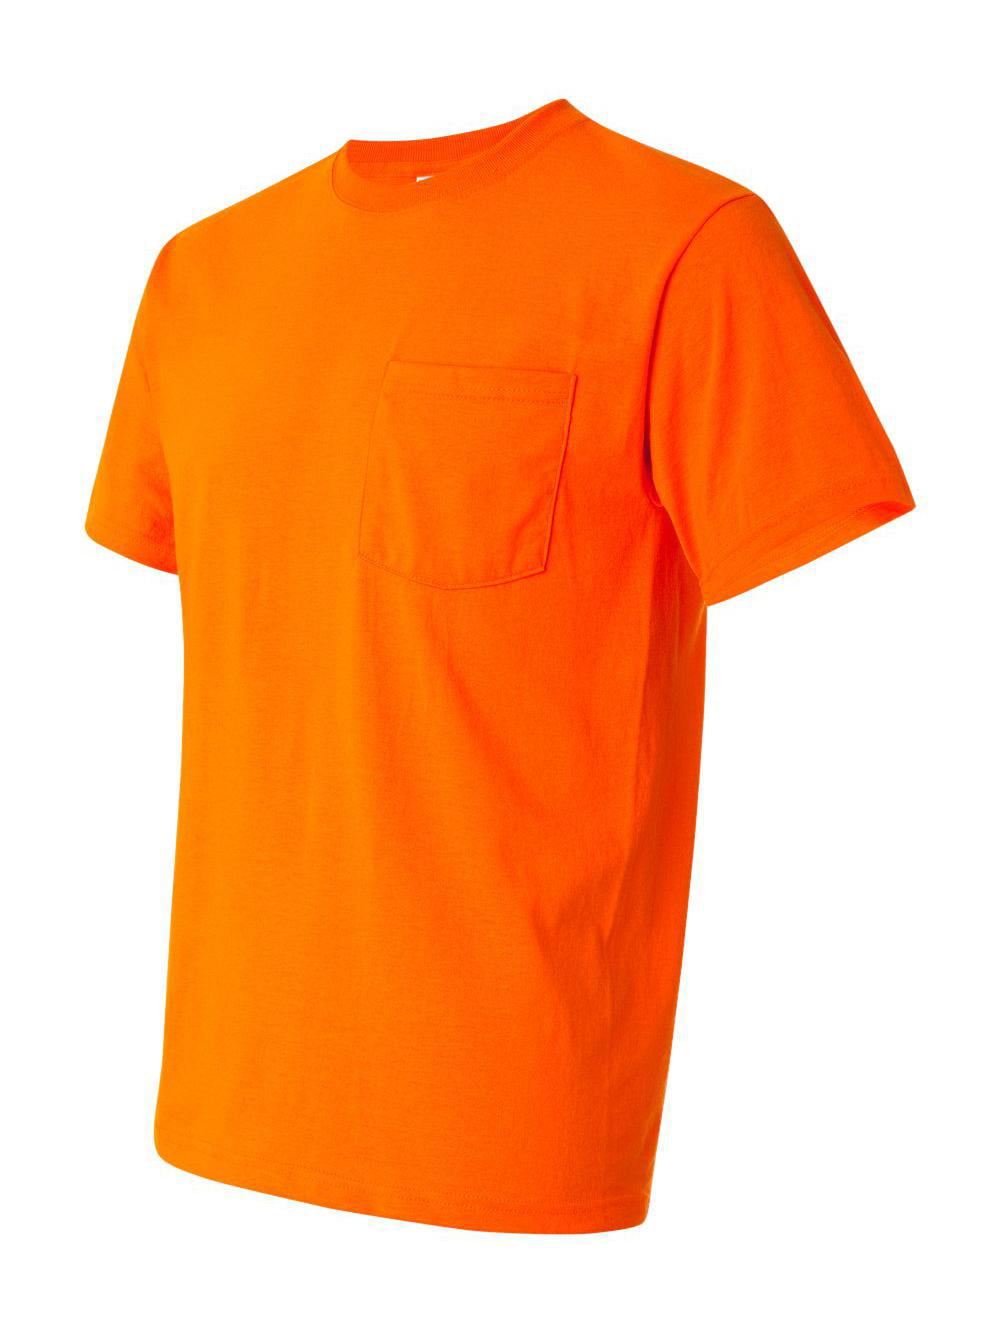 JERZEES - Adult DRI-POWER® ACTIVE Pocket T-Shirt - SAFETY ORANGE - XL ...